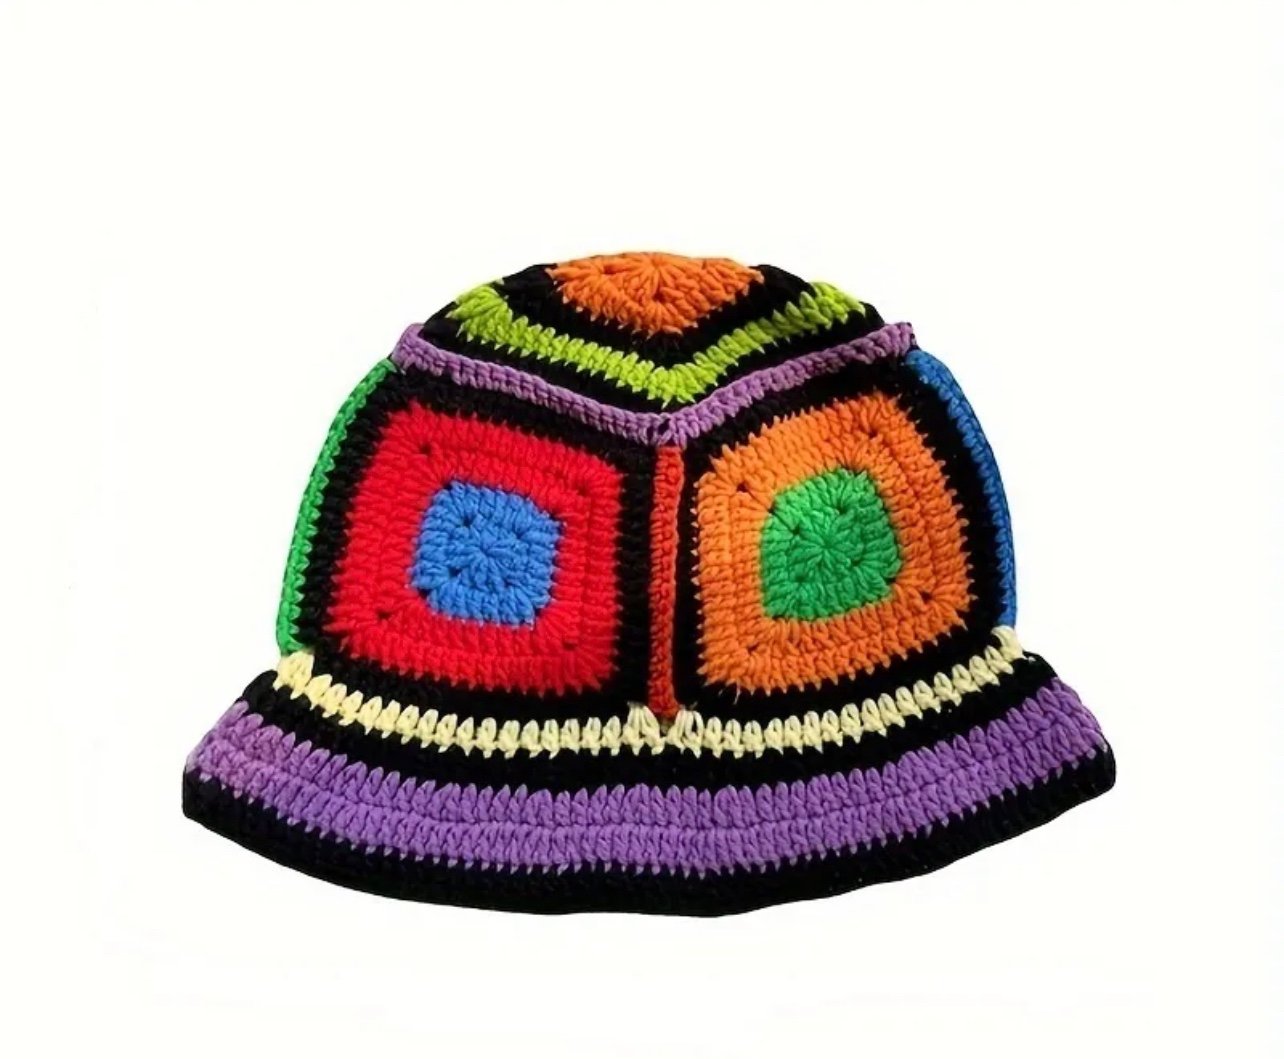 Crochet colorblock hat DcVfuFUku